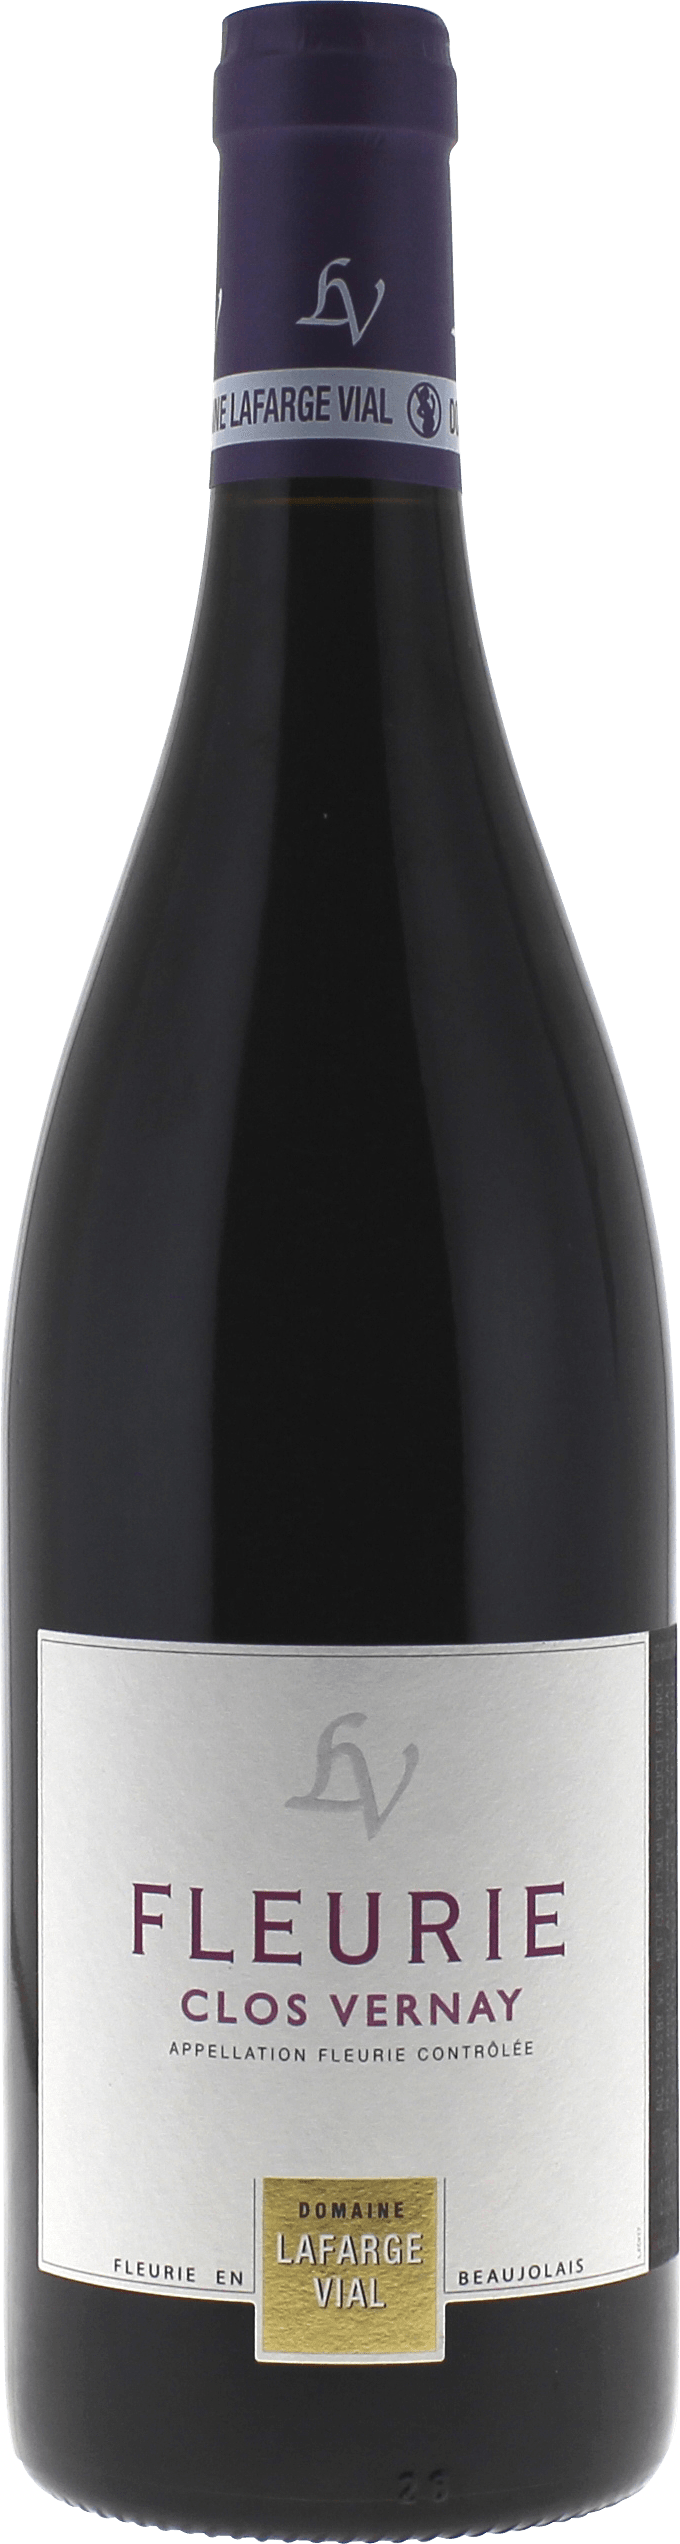 Fleurie clos vernay 2017  LAFARGE VIAL, Slection Beaujolais